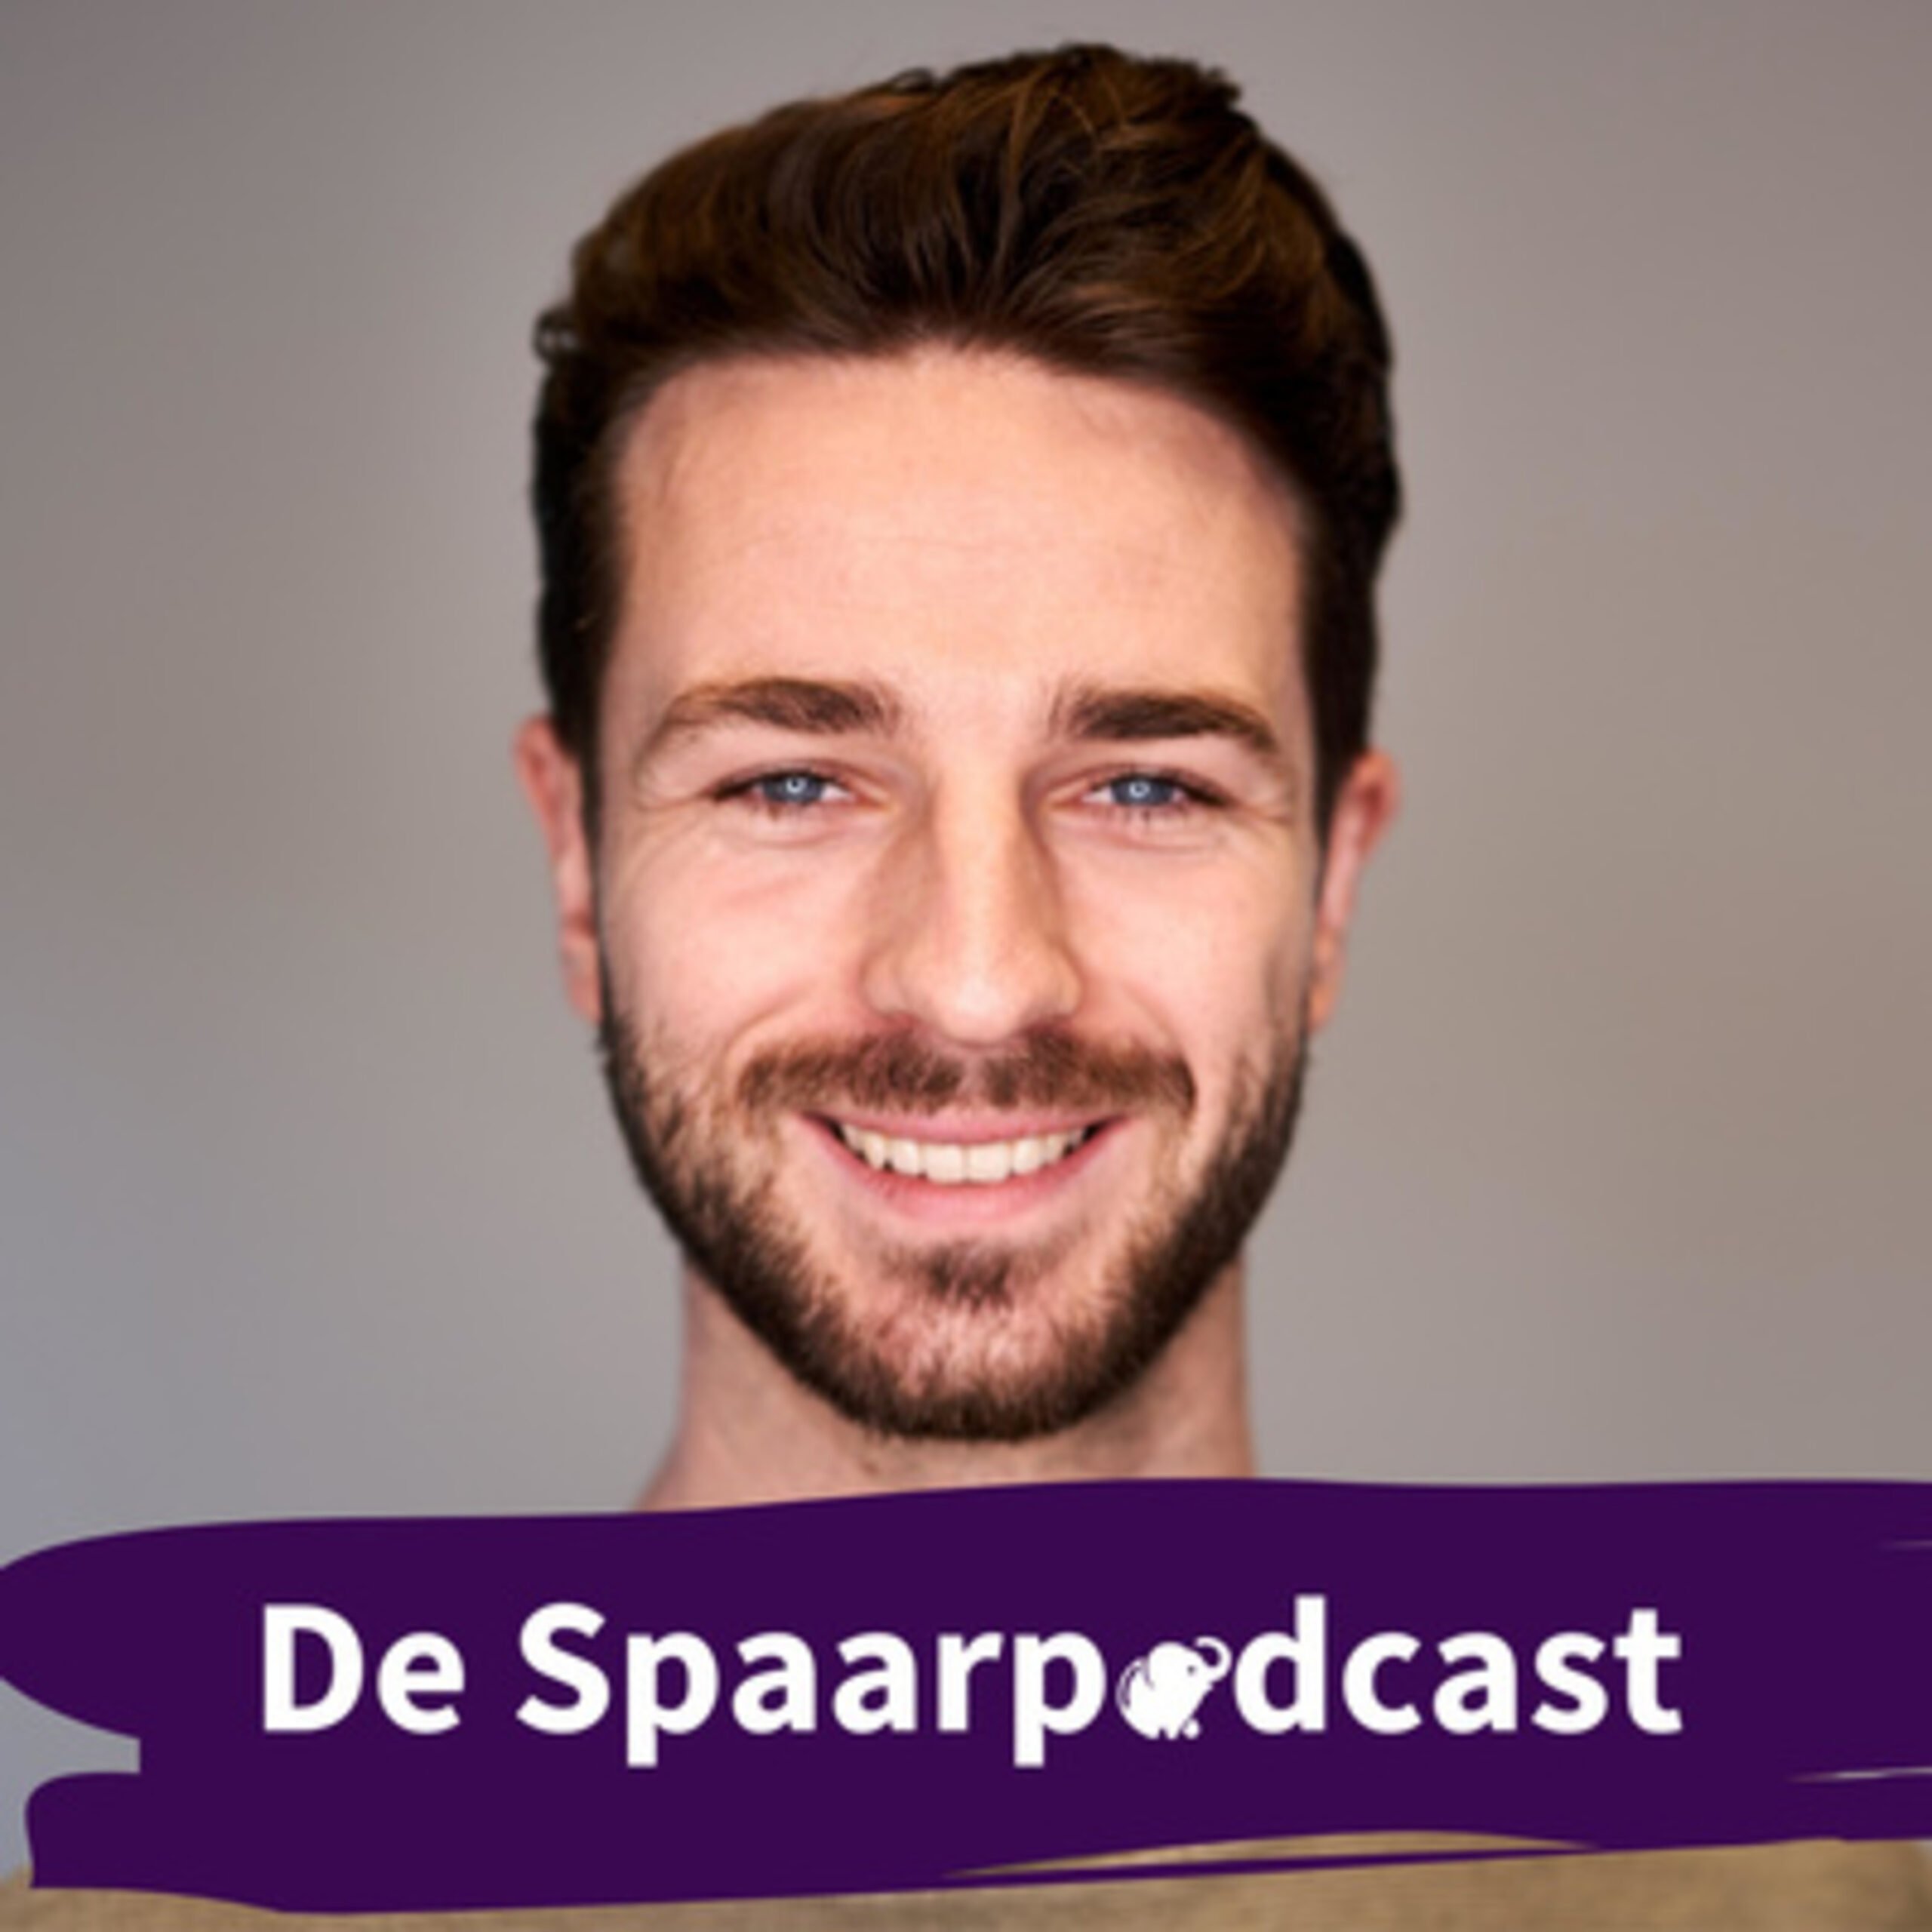 De Spaarpodcast logo